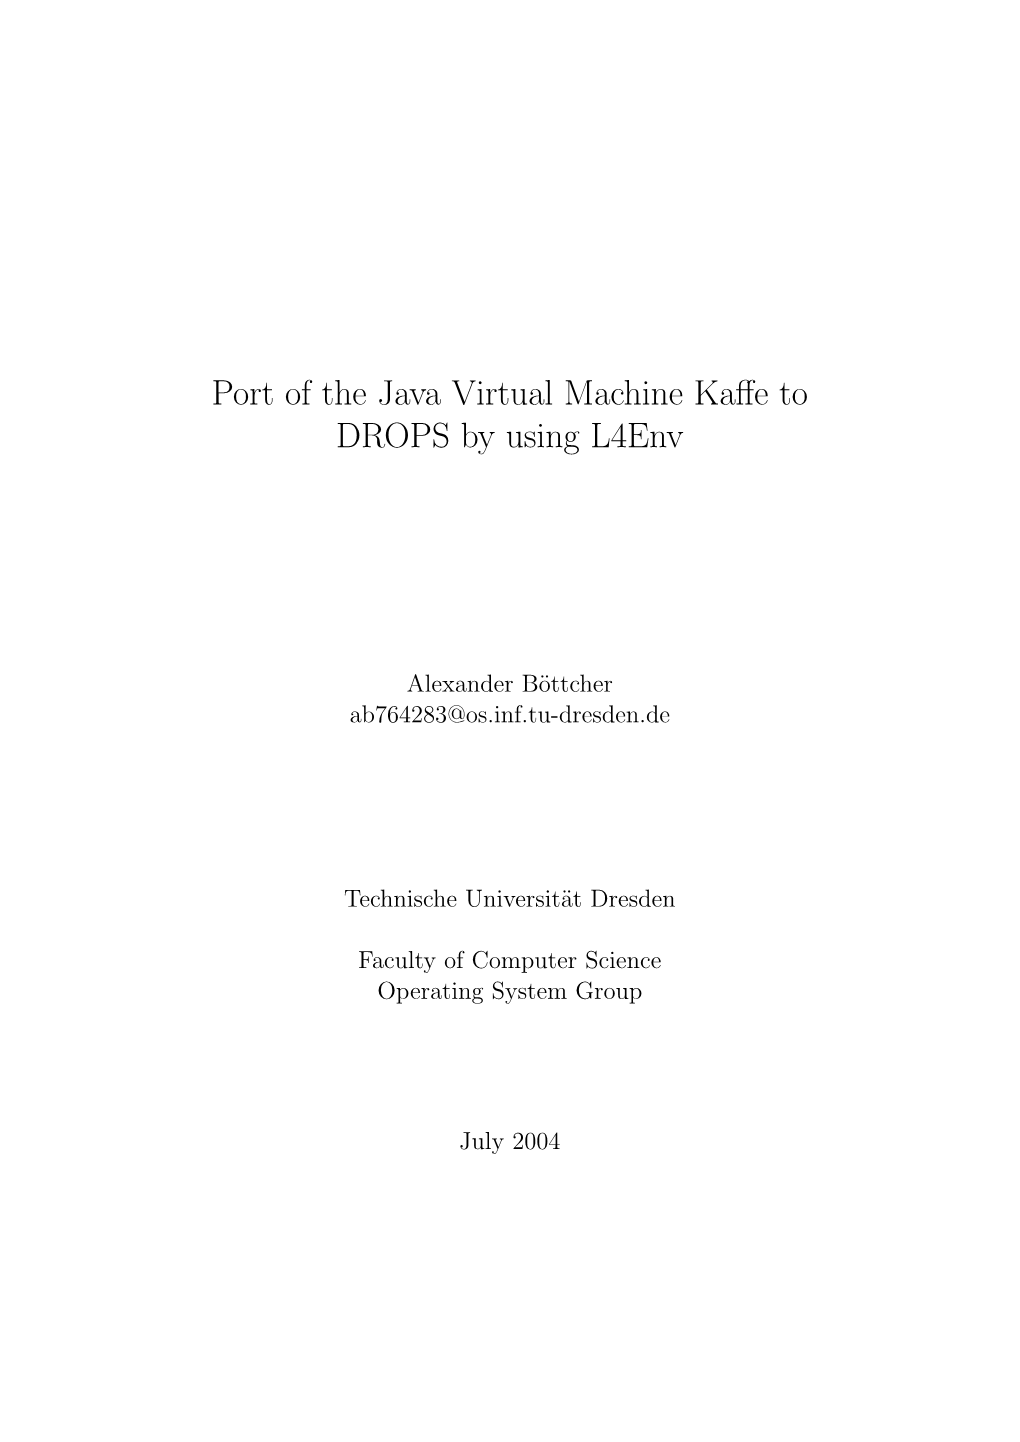 Port of the Java Virtual Machine Kaffe to DROPS by Using L4env